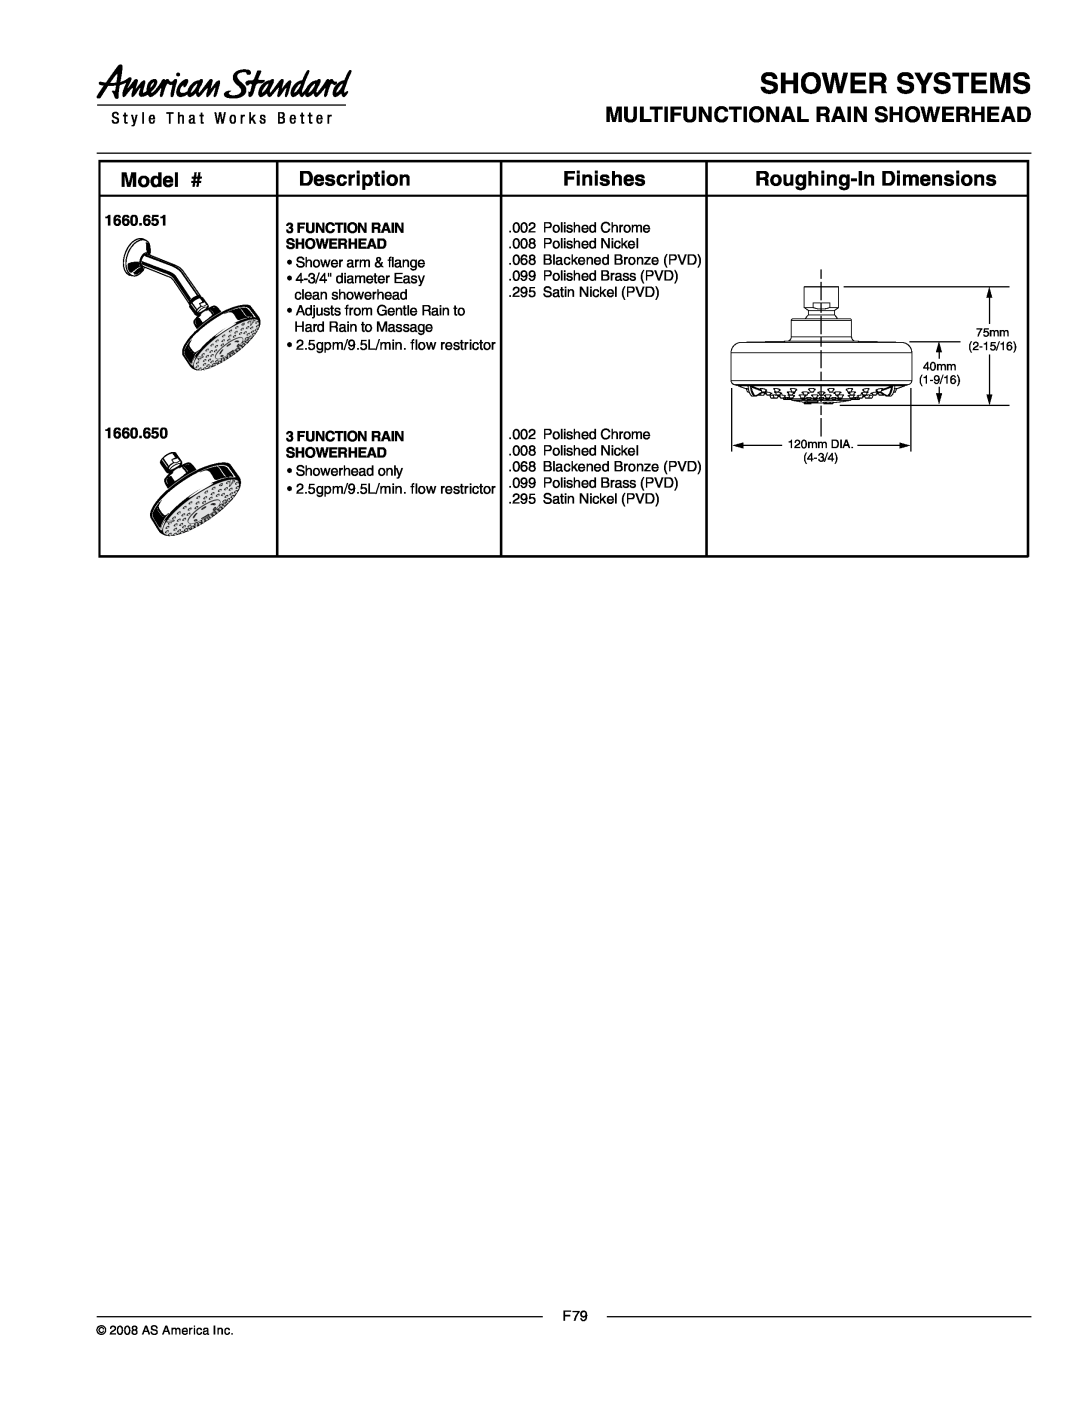 American Standard 1660.651 dimensions Shower Systems, Multifunctional Rain Showerhead, Model #, Description, Finishes 